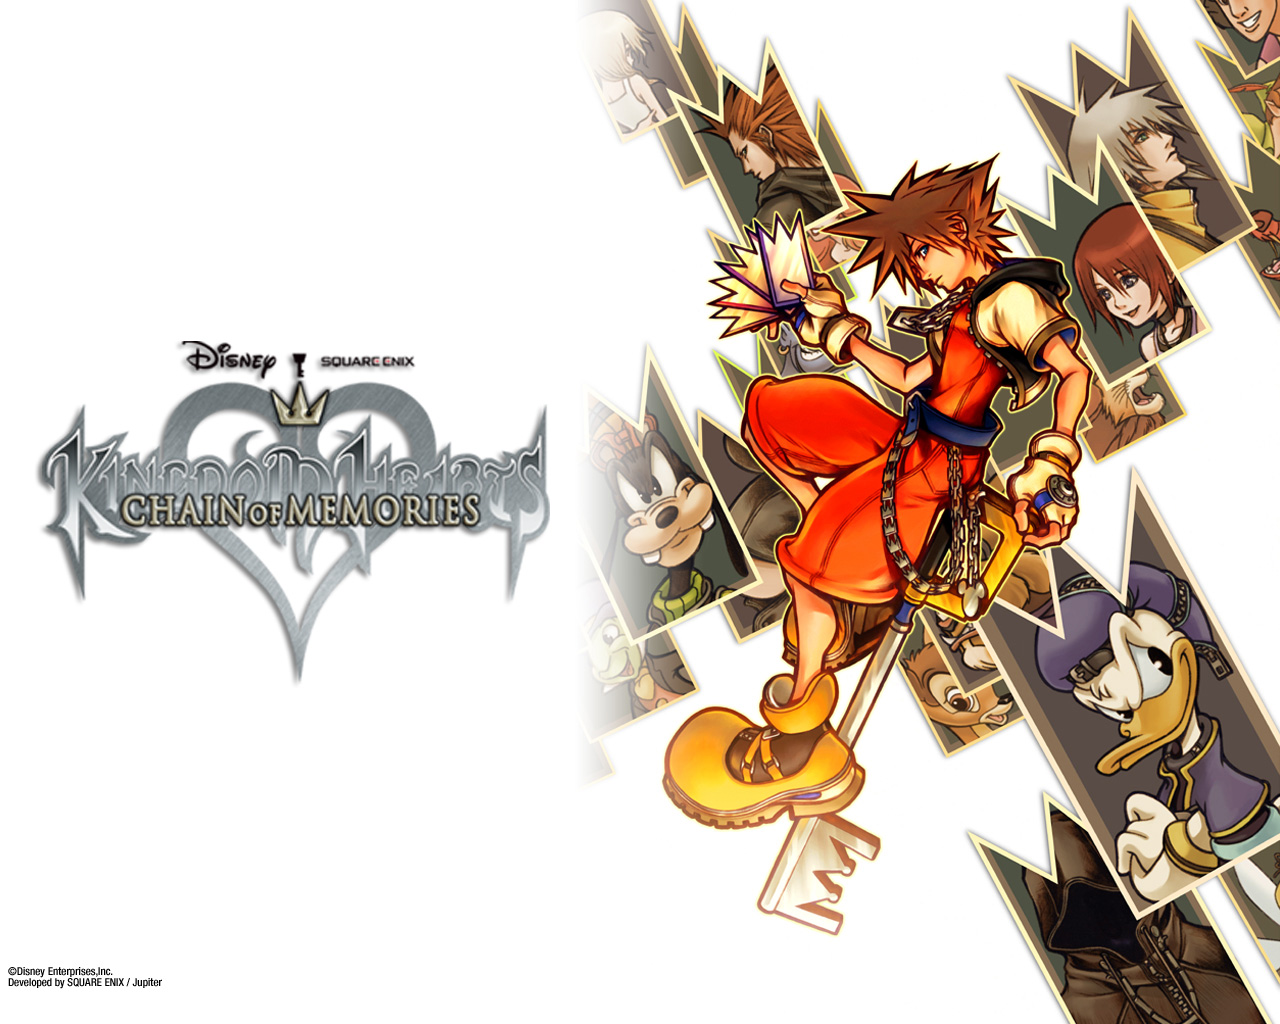 4. Kingdom Hearts: Chain of Memories